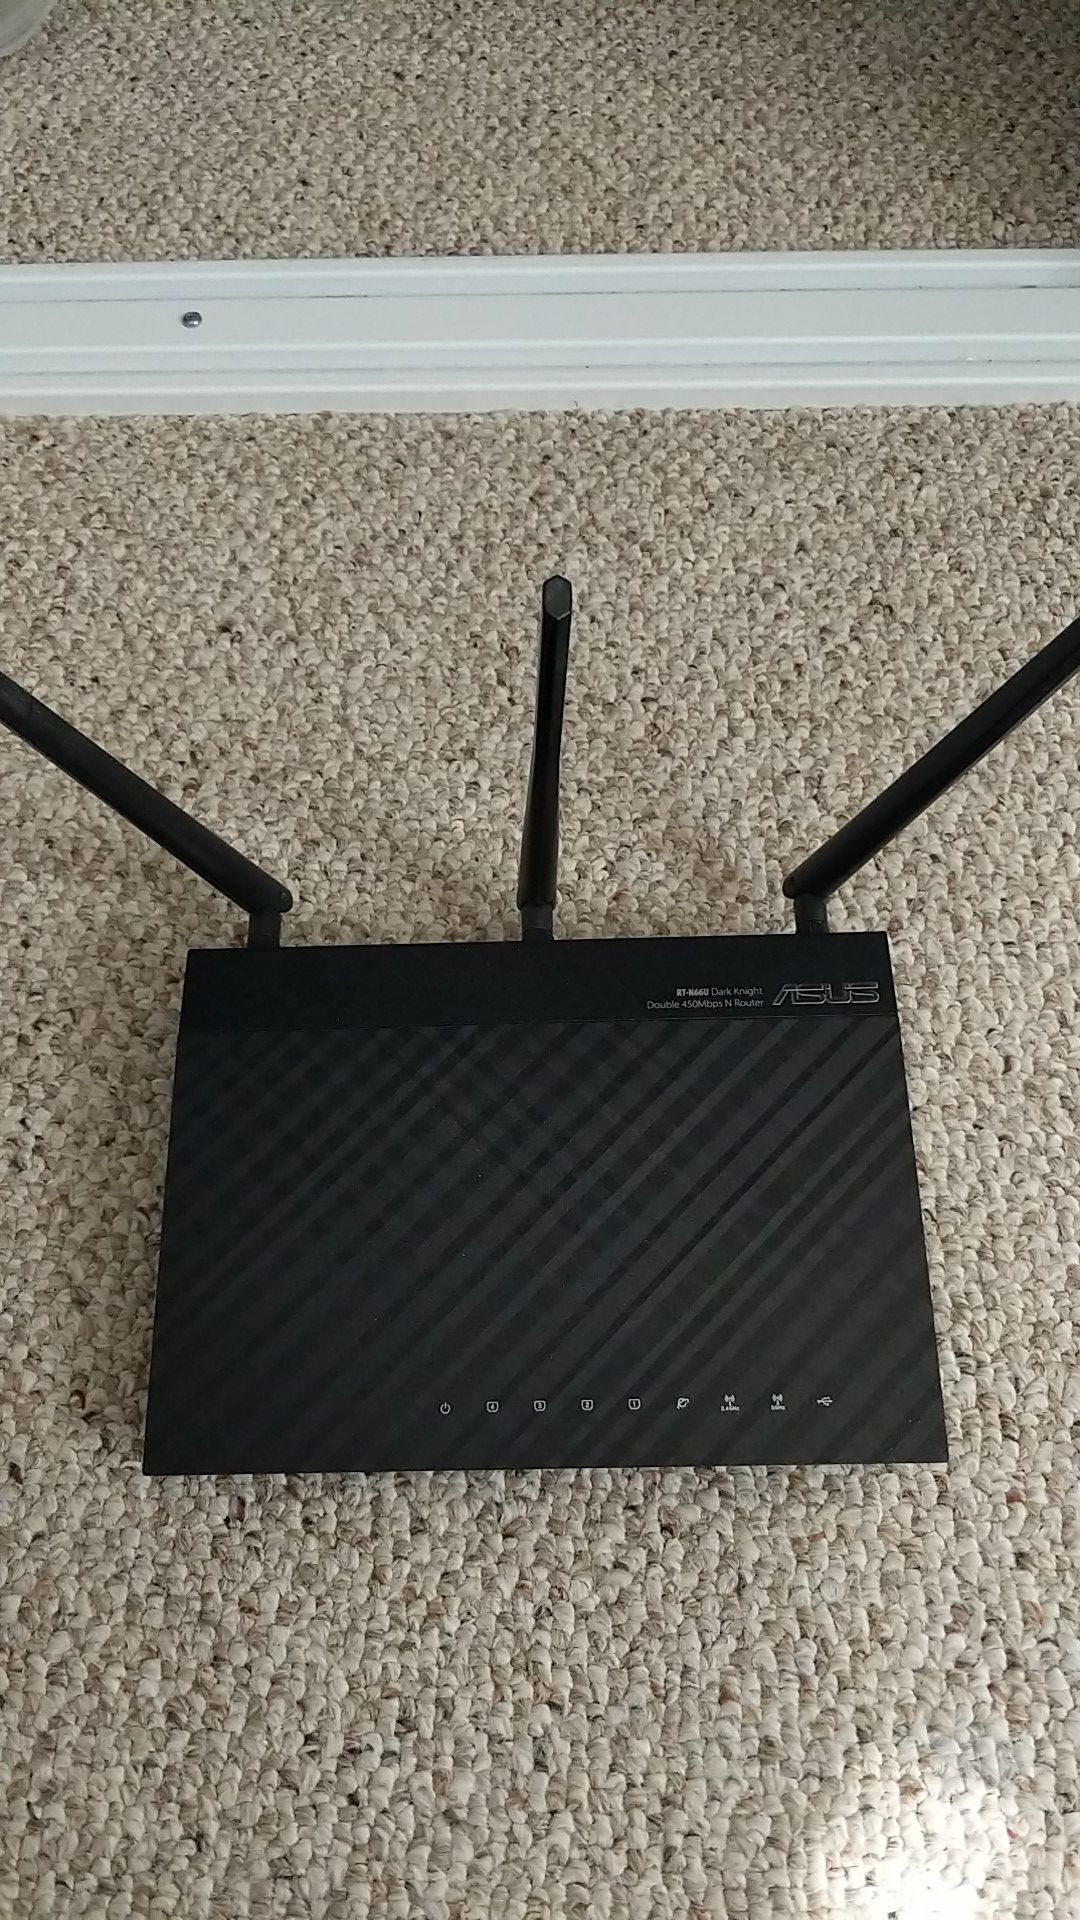 ASUS RT-N66U "Dark Knight" wireless router